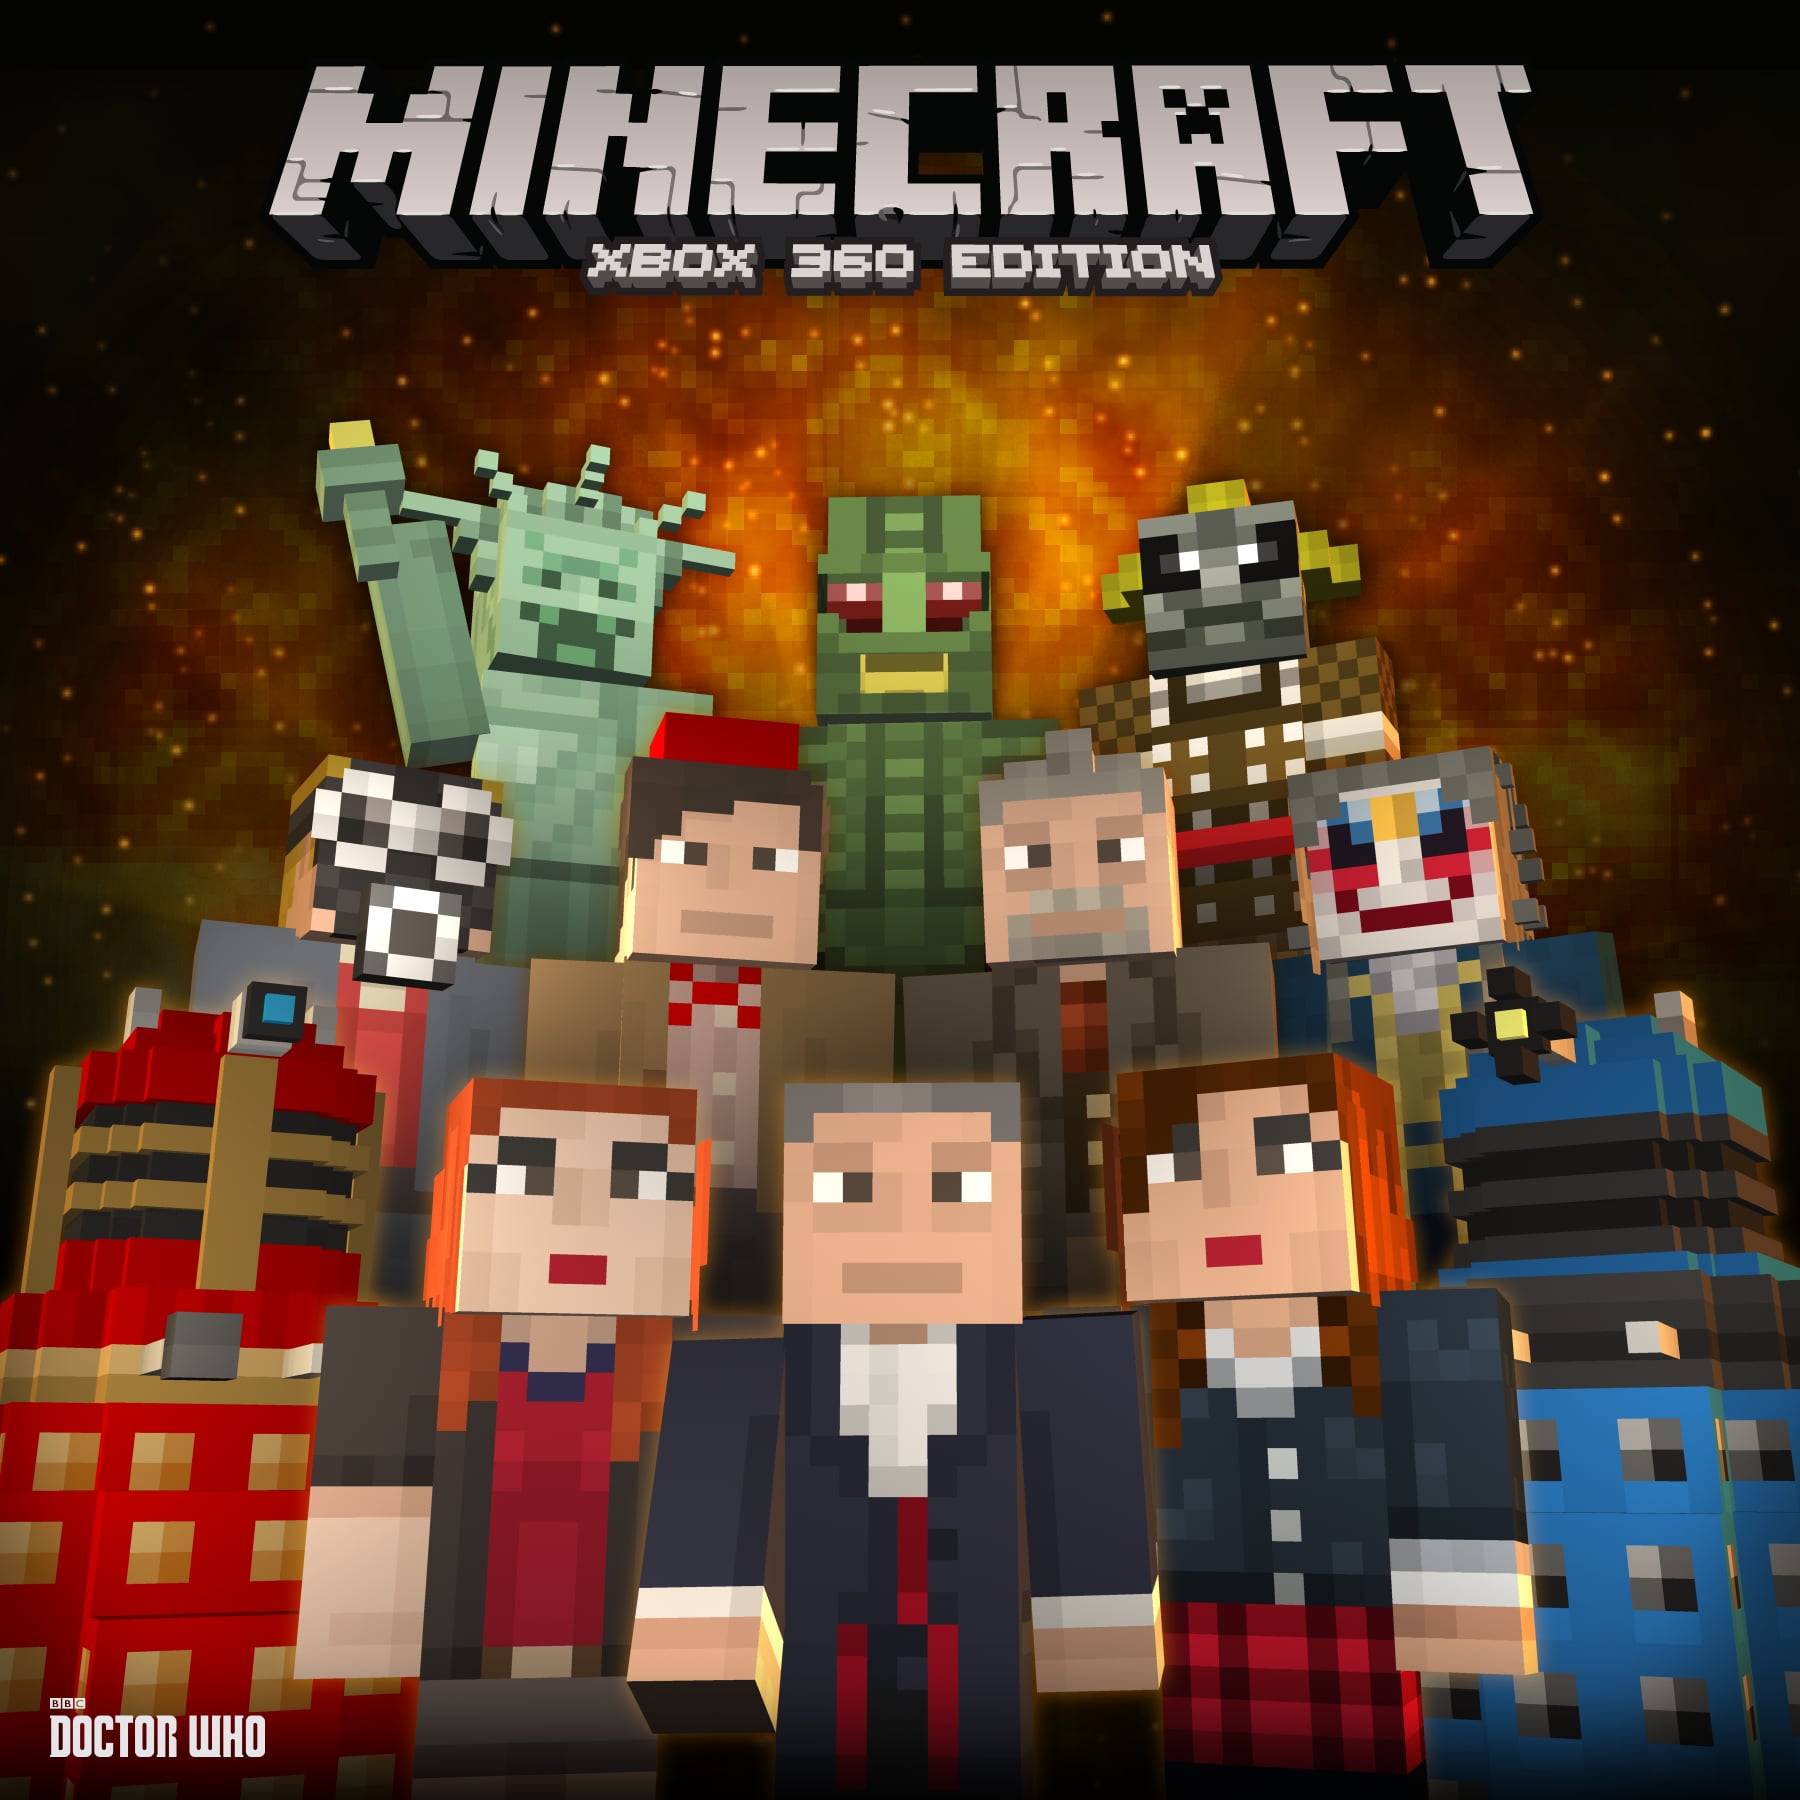 Skin Pack 3 Minecraft Xbox 360 Edition 